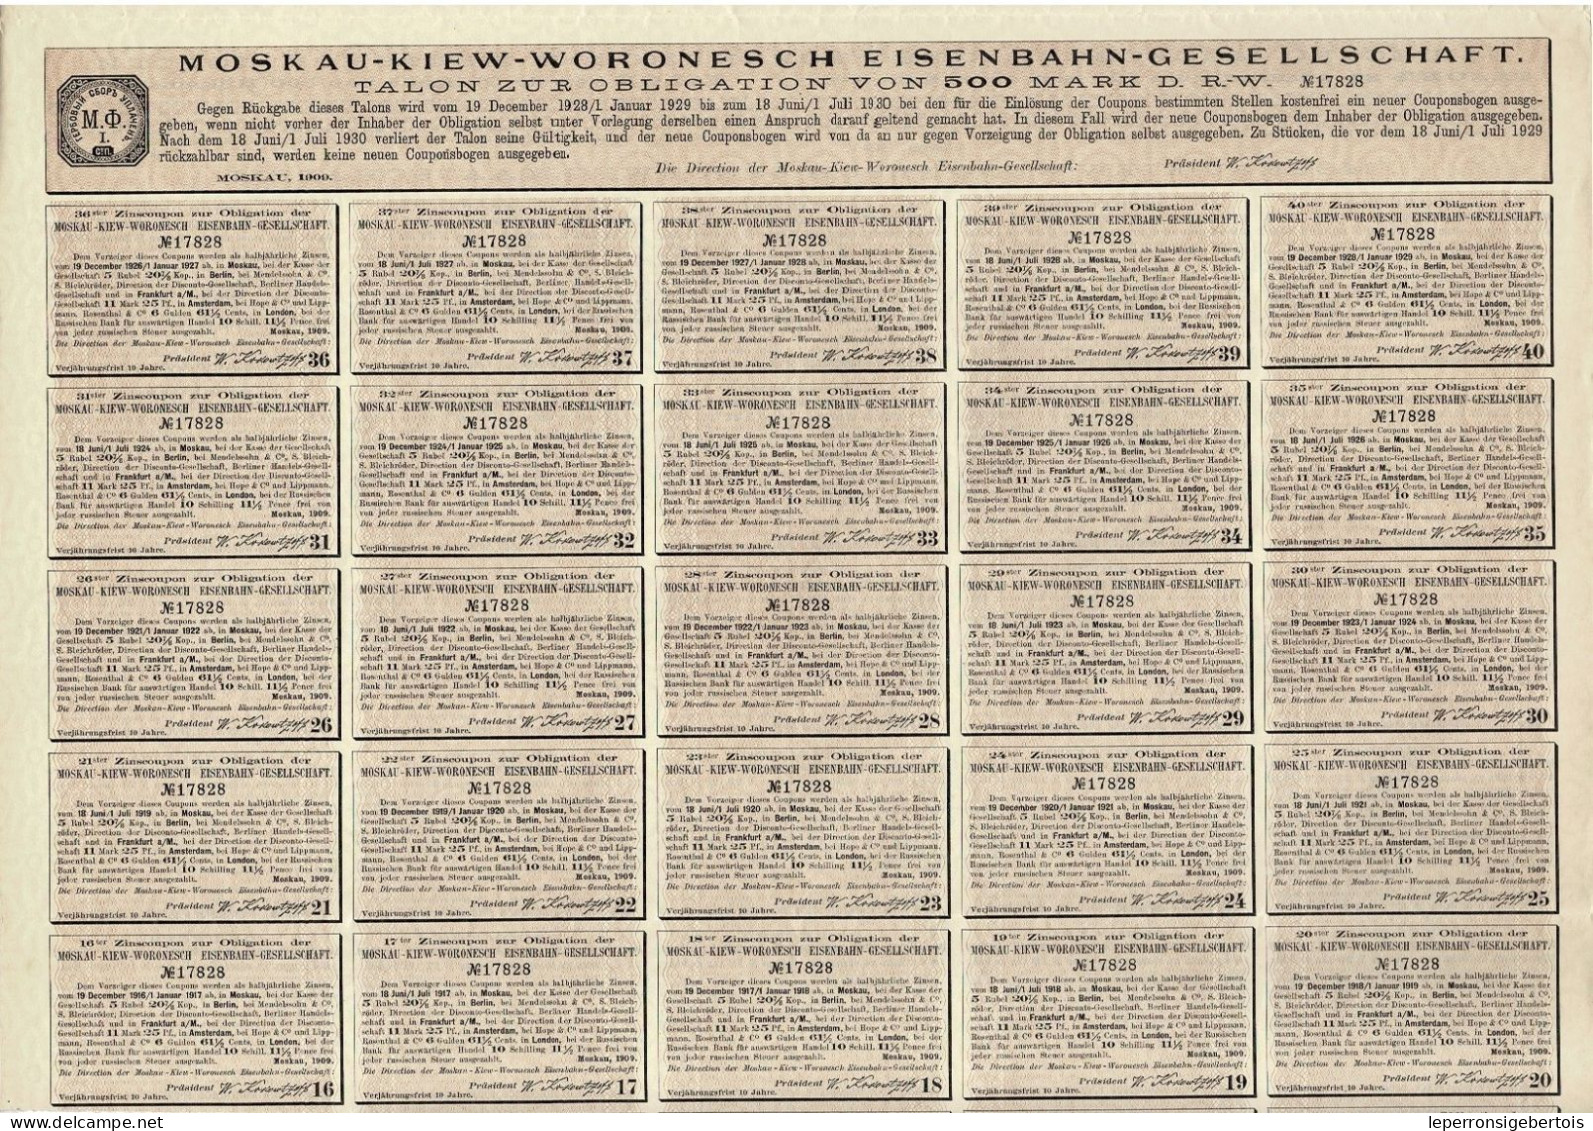 Obligation De 1909 - Moskau-Kiew-Woronesch Eisenbahn-Gesellschaft 4 1/2% - Cie Du Chemin De Fer De Moscou-Kiev-Voronège - Rusia